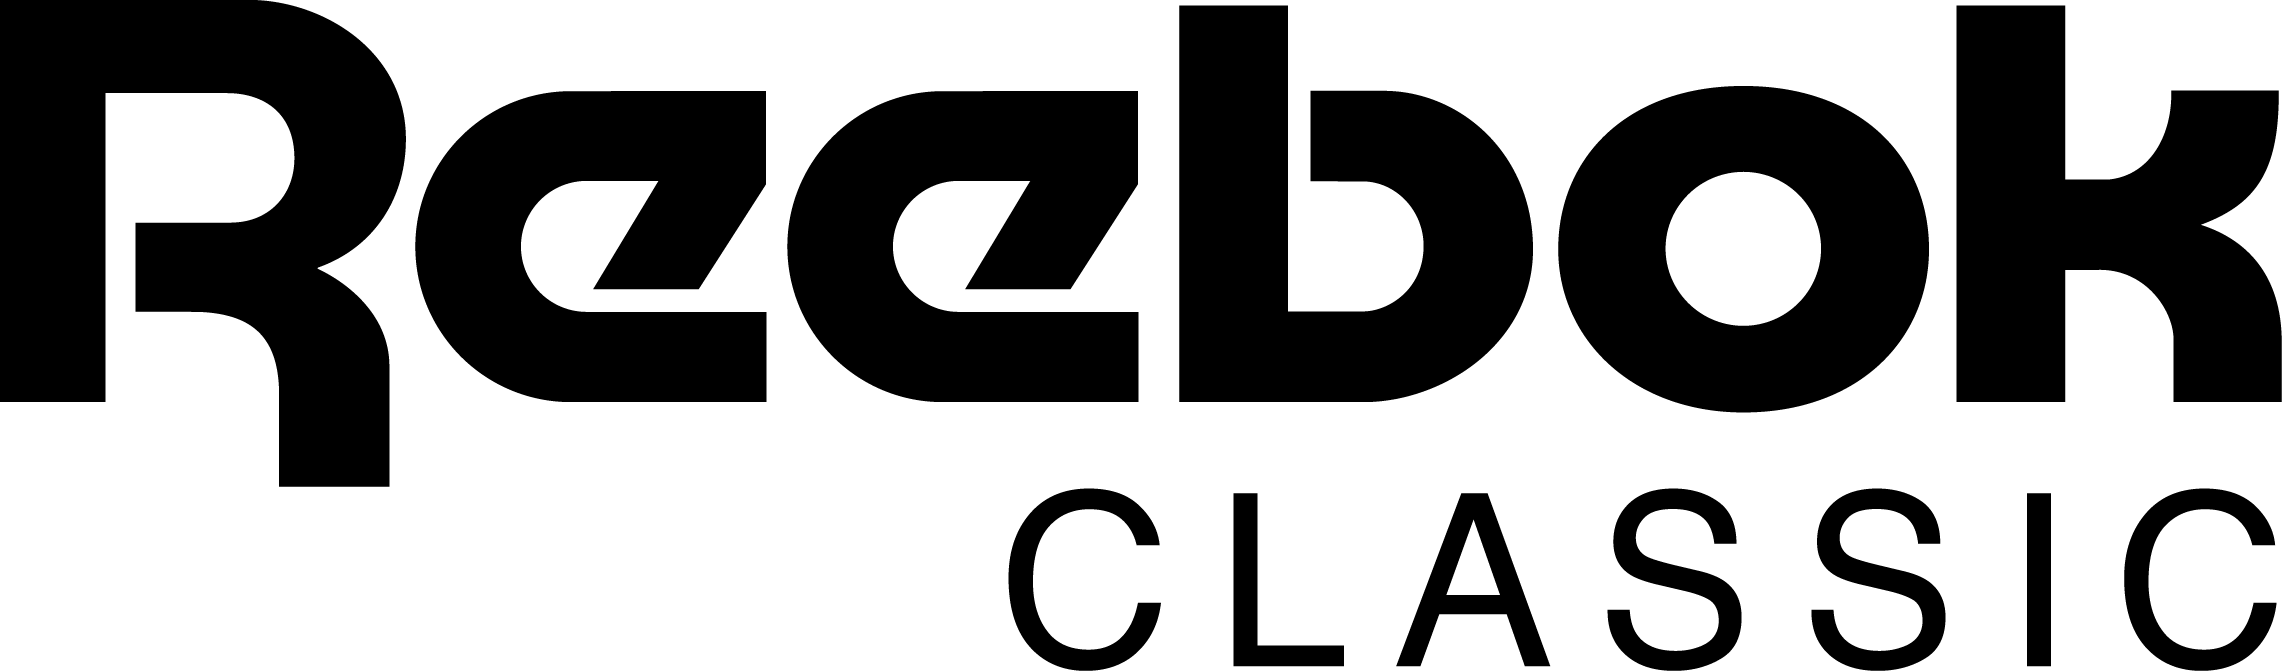 Reebok Classic Logo 2 By Alex - Reebok Classic Logo Png (2282x671), Png Download